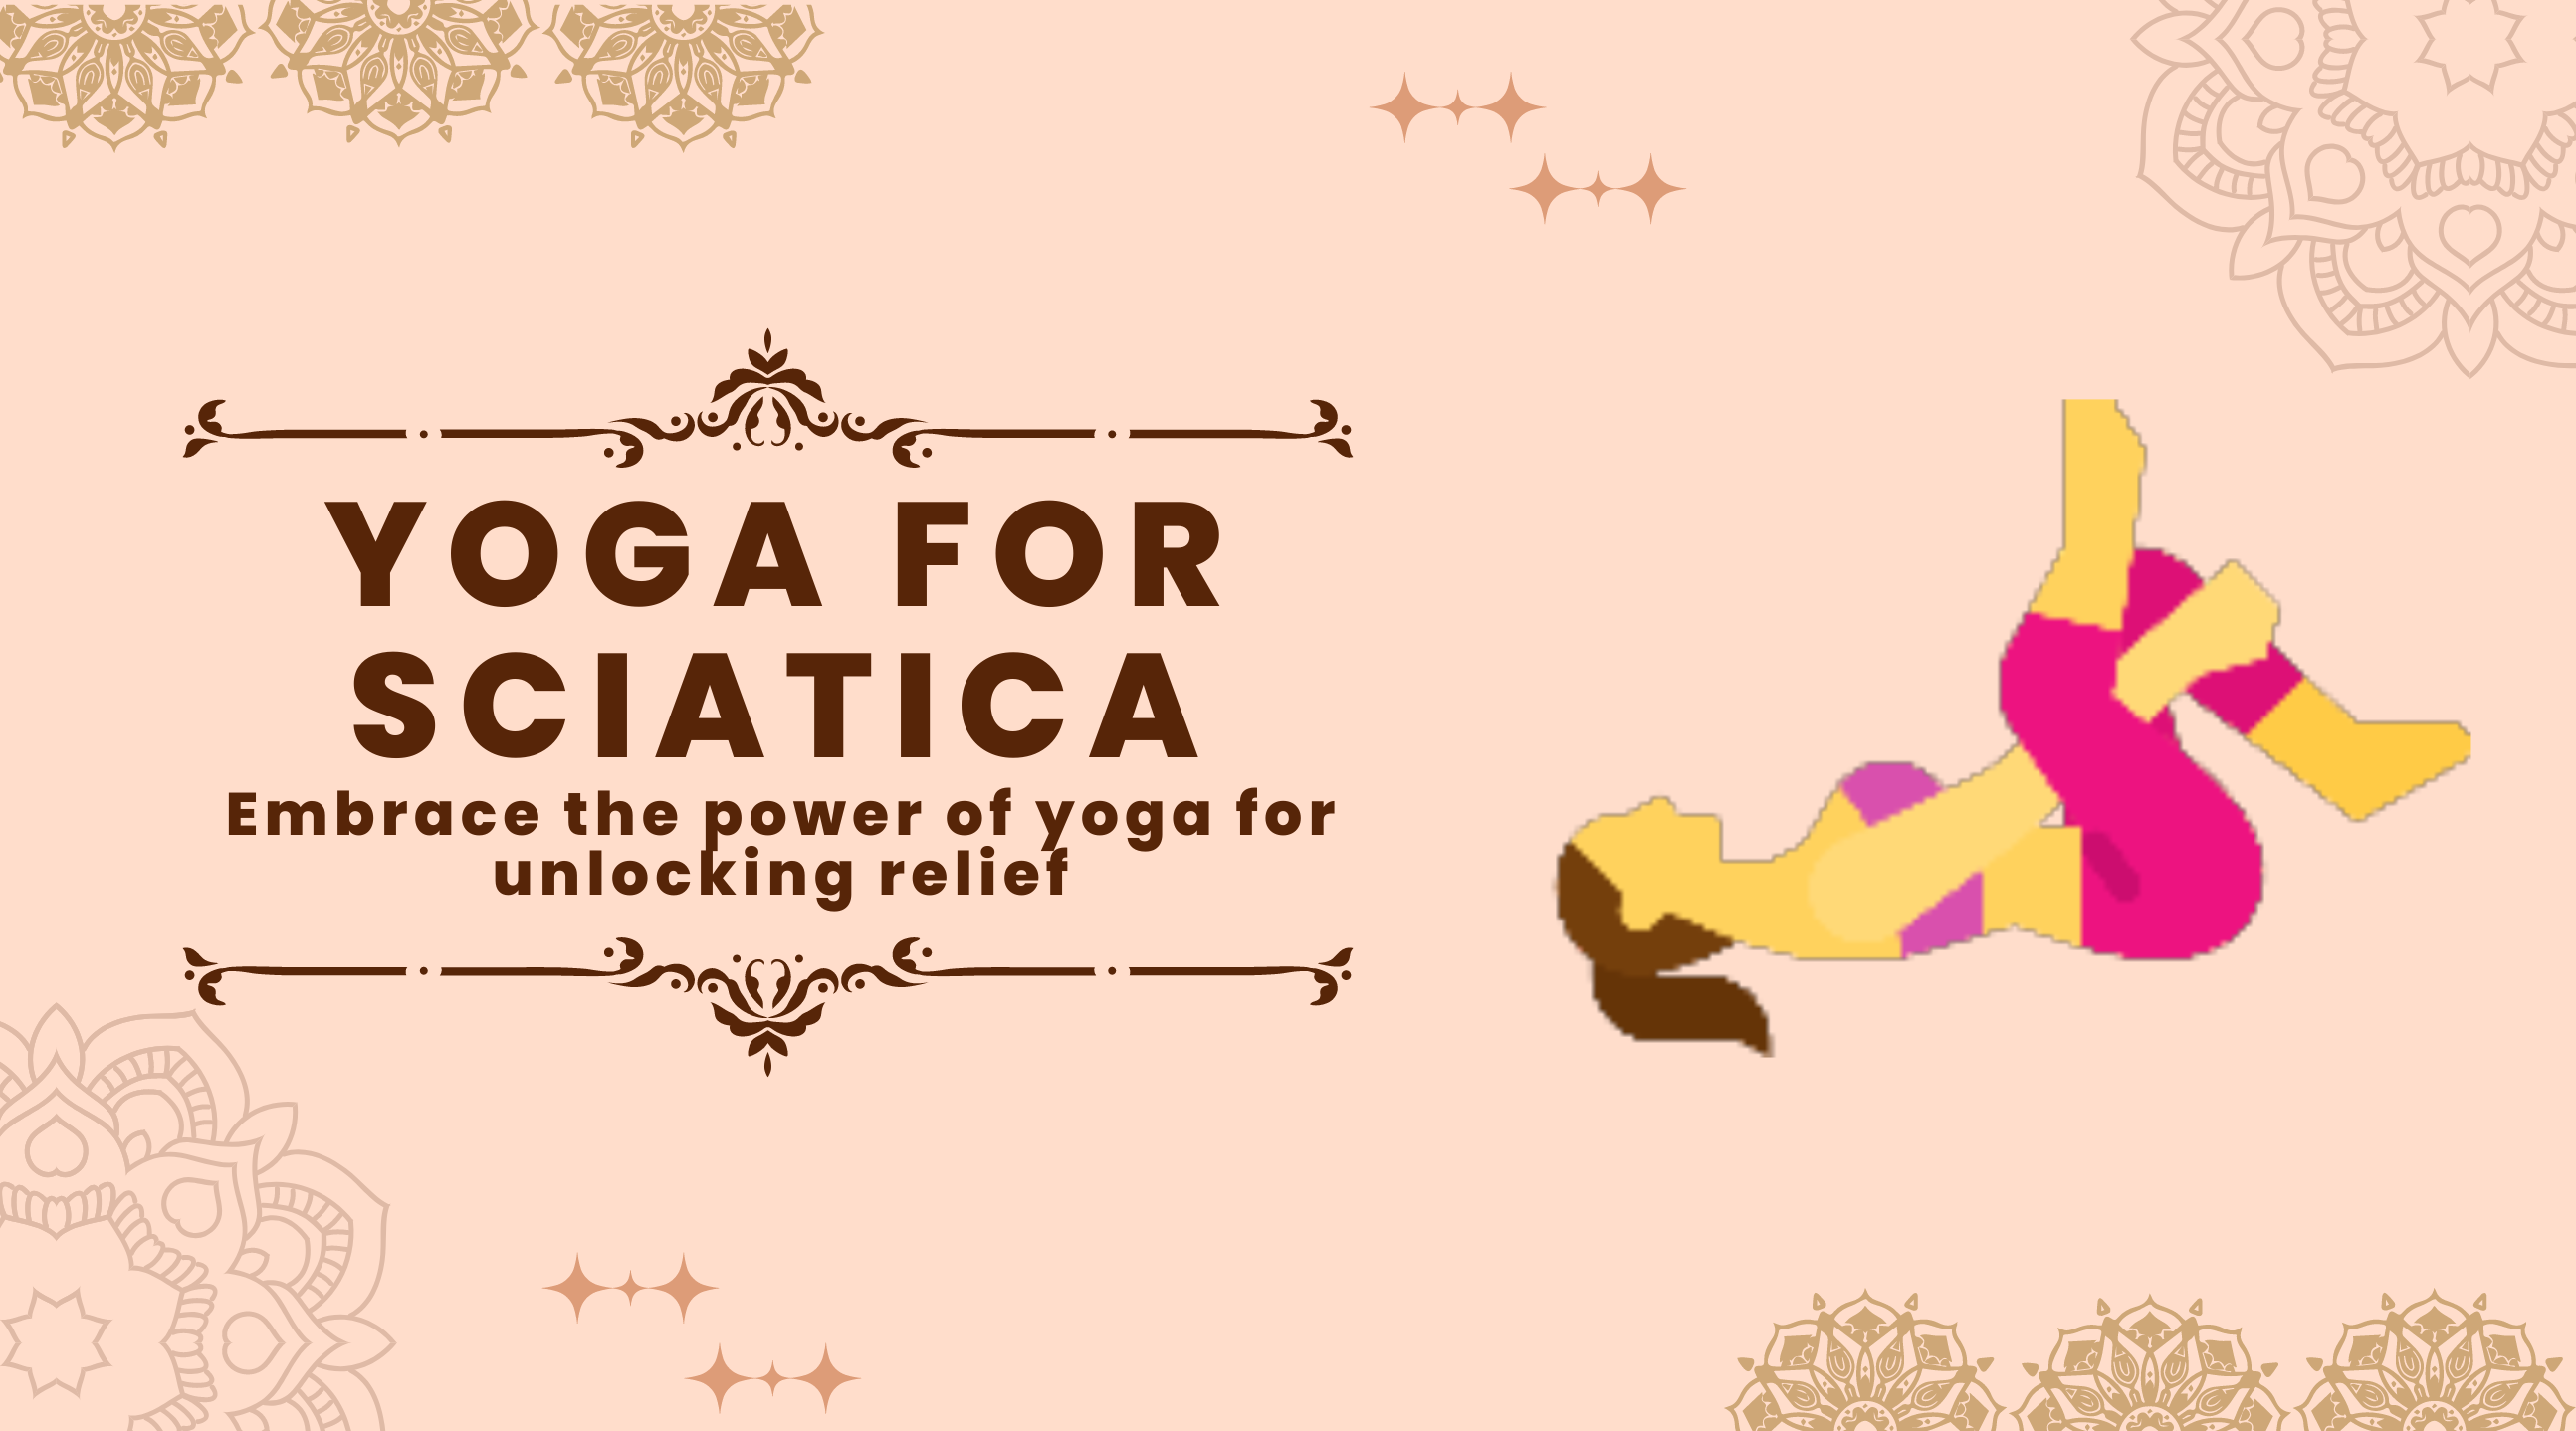 Yoga for Sciatica: Embrace the power of yoga for healing sciatica pain